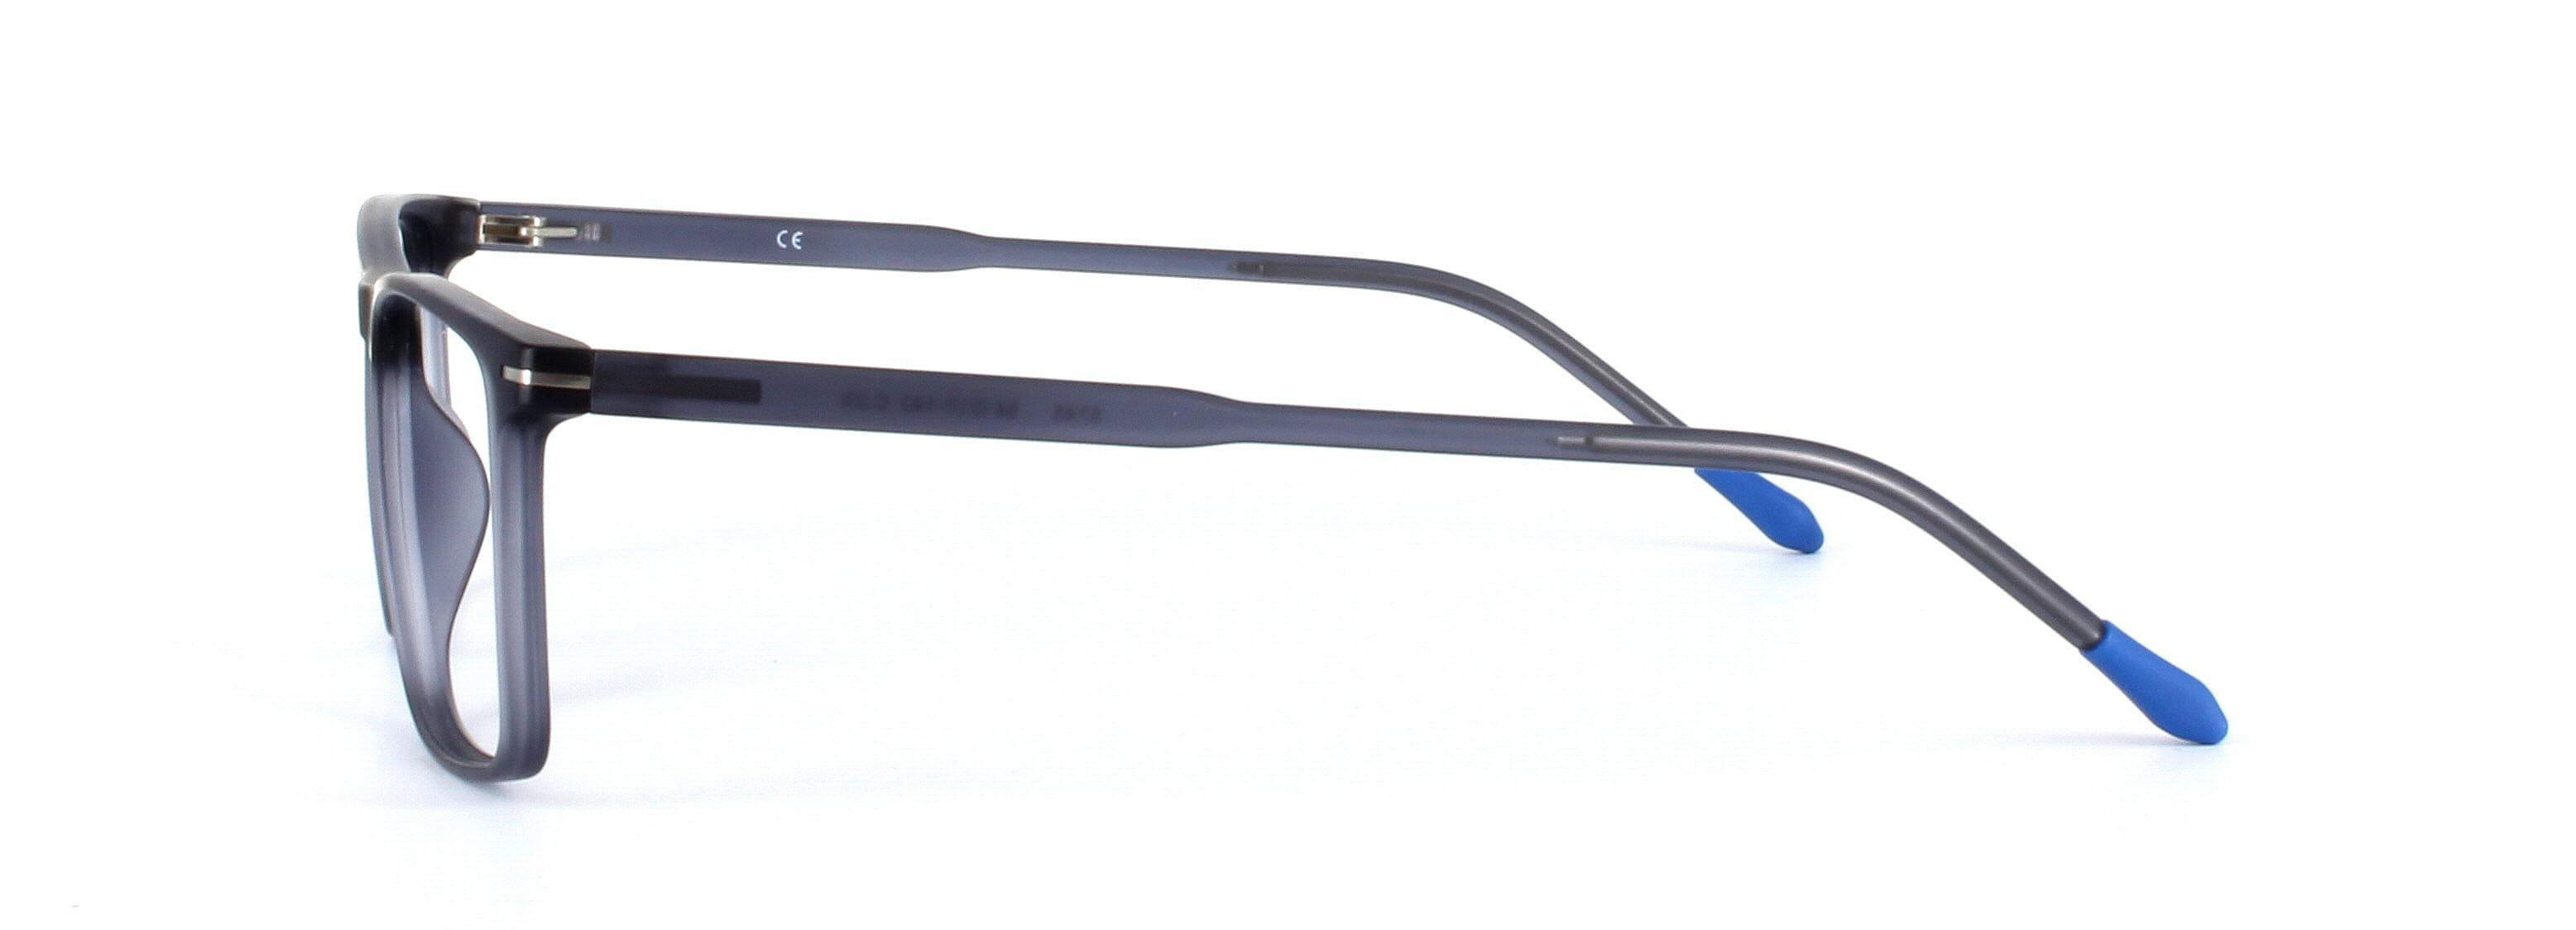 Colorado Grey Full Rim Plastic Glasses - Image View 2